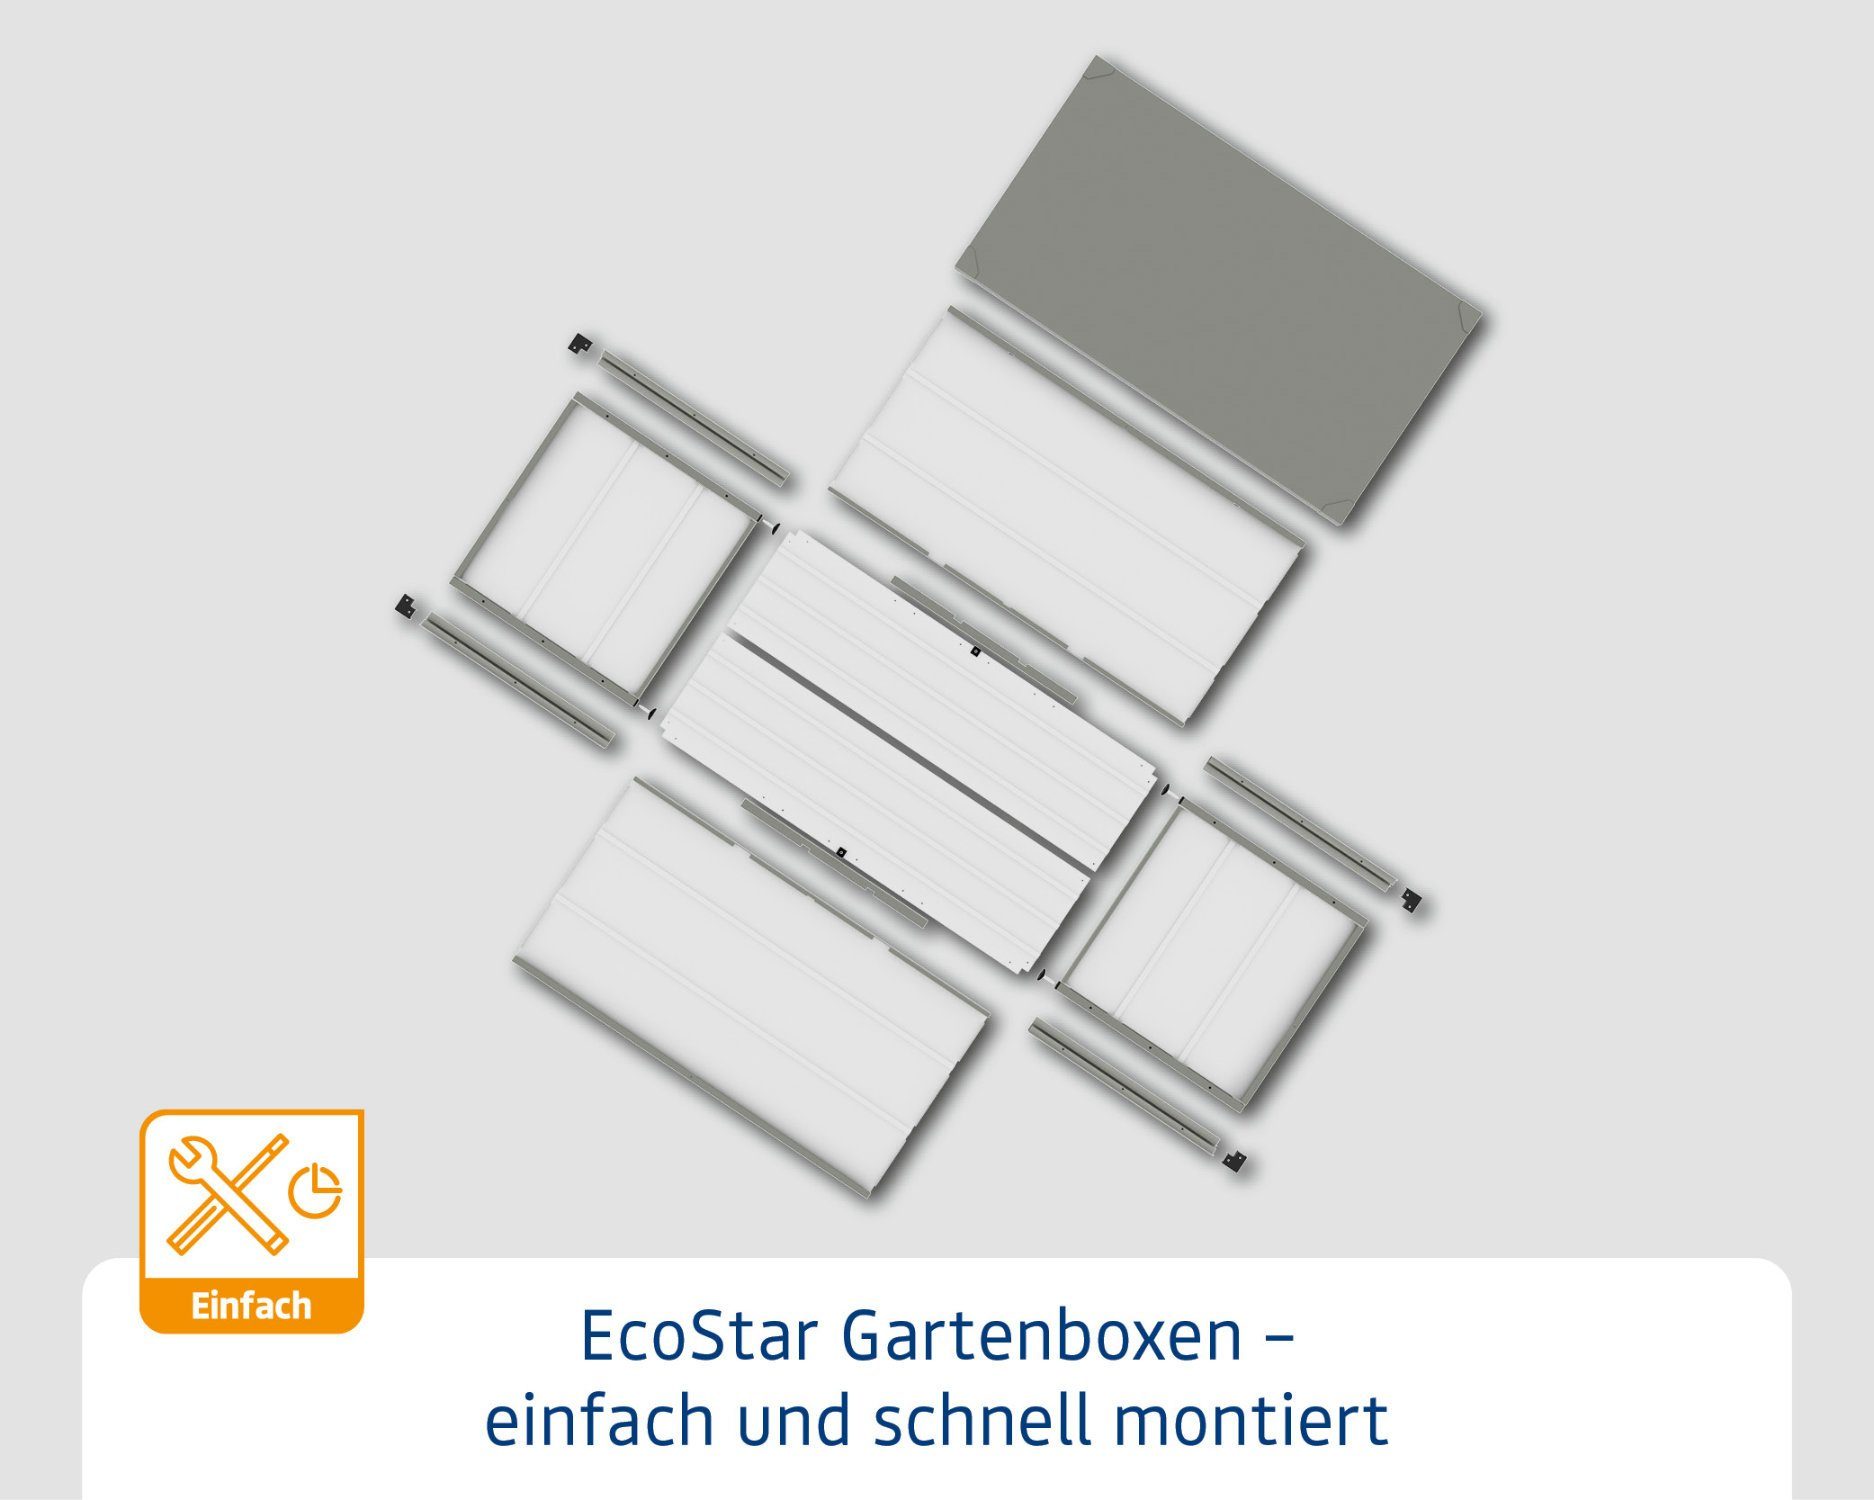 830 Ecostar / Hörmann / grau Kissenbox, Gerätebox l Gartenbox